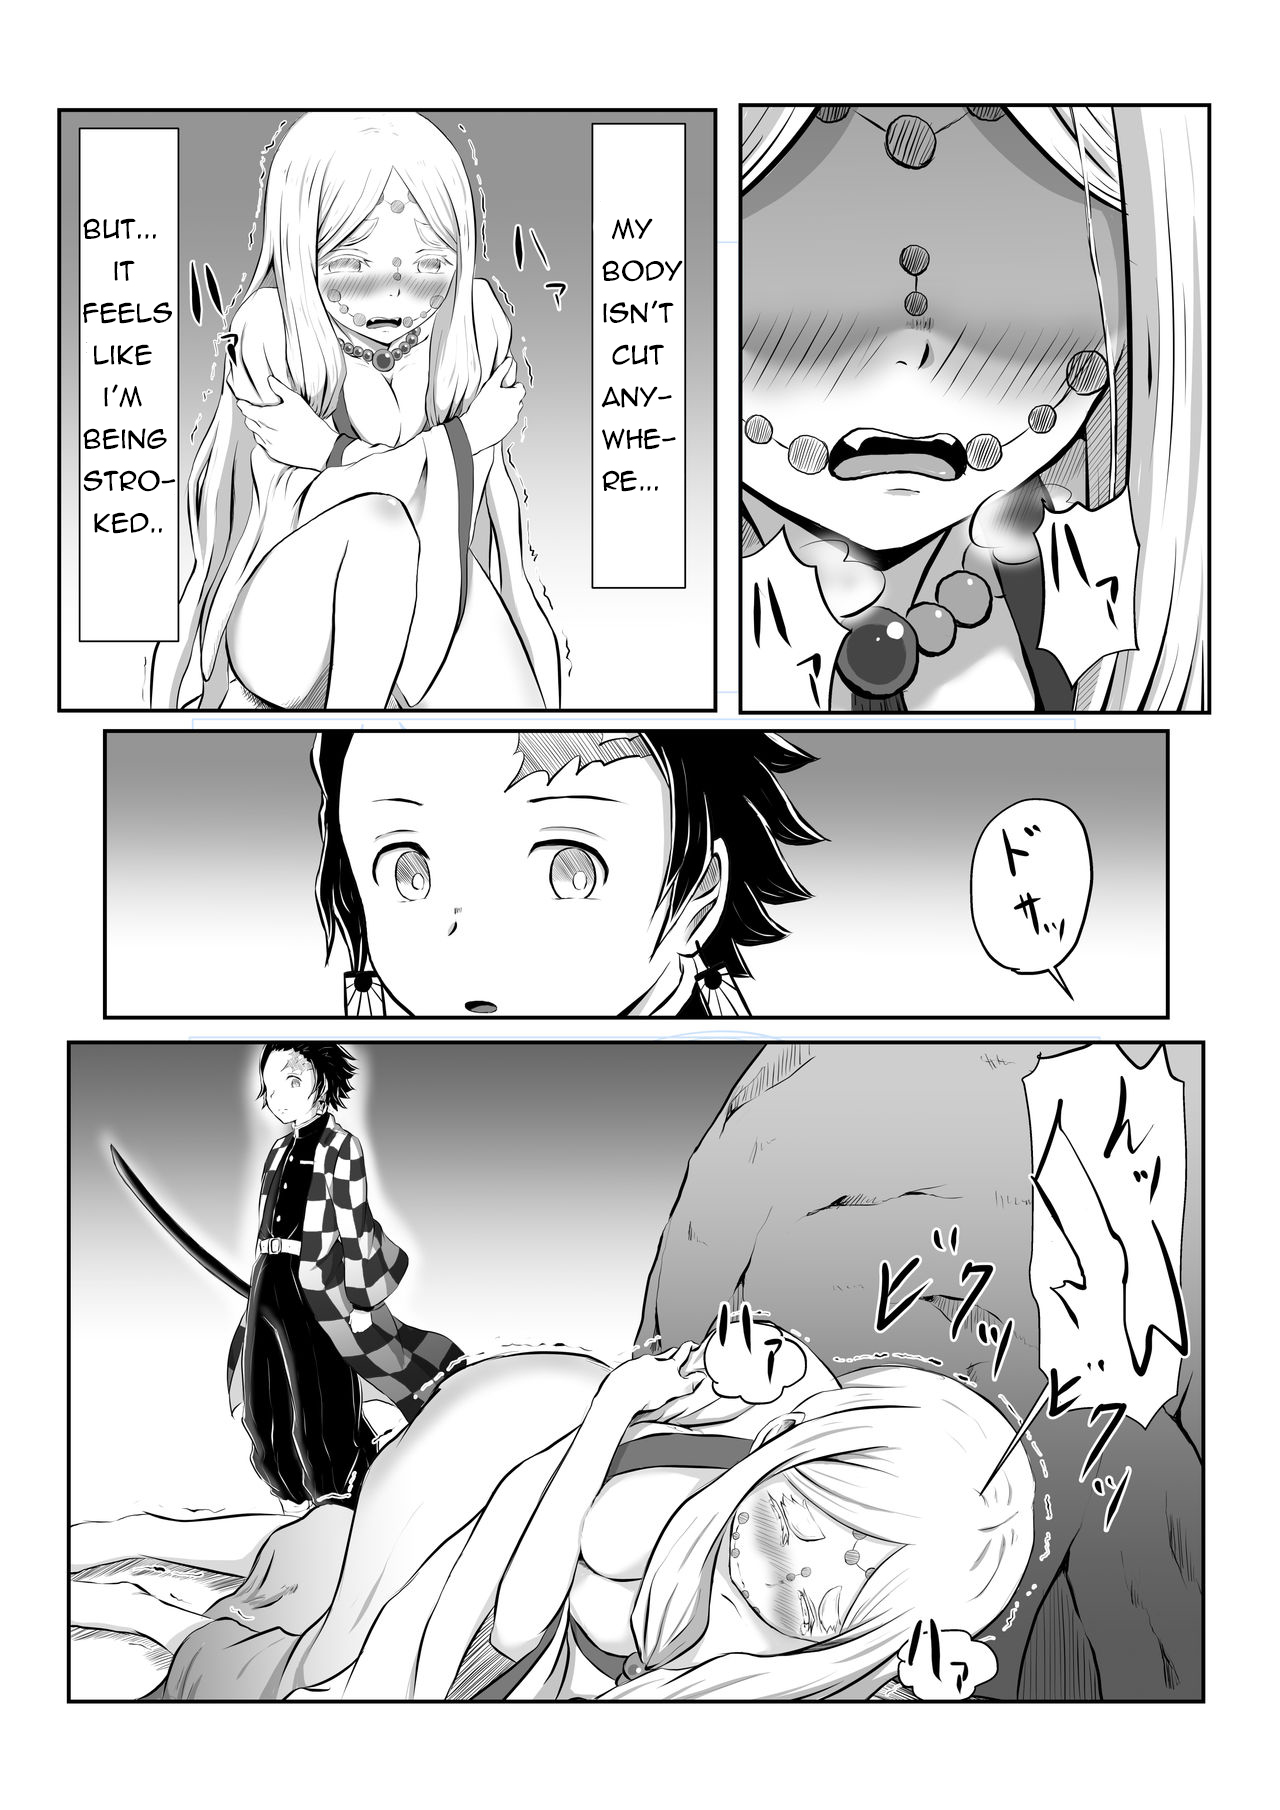 Hinokami Sex. ヒノカミセックス - Page 6 - HentaiEra